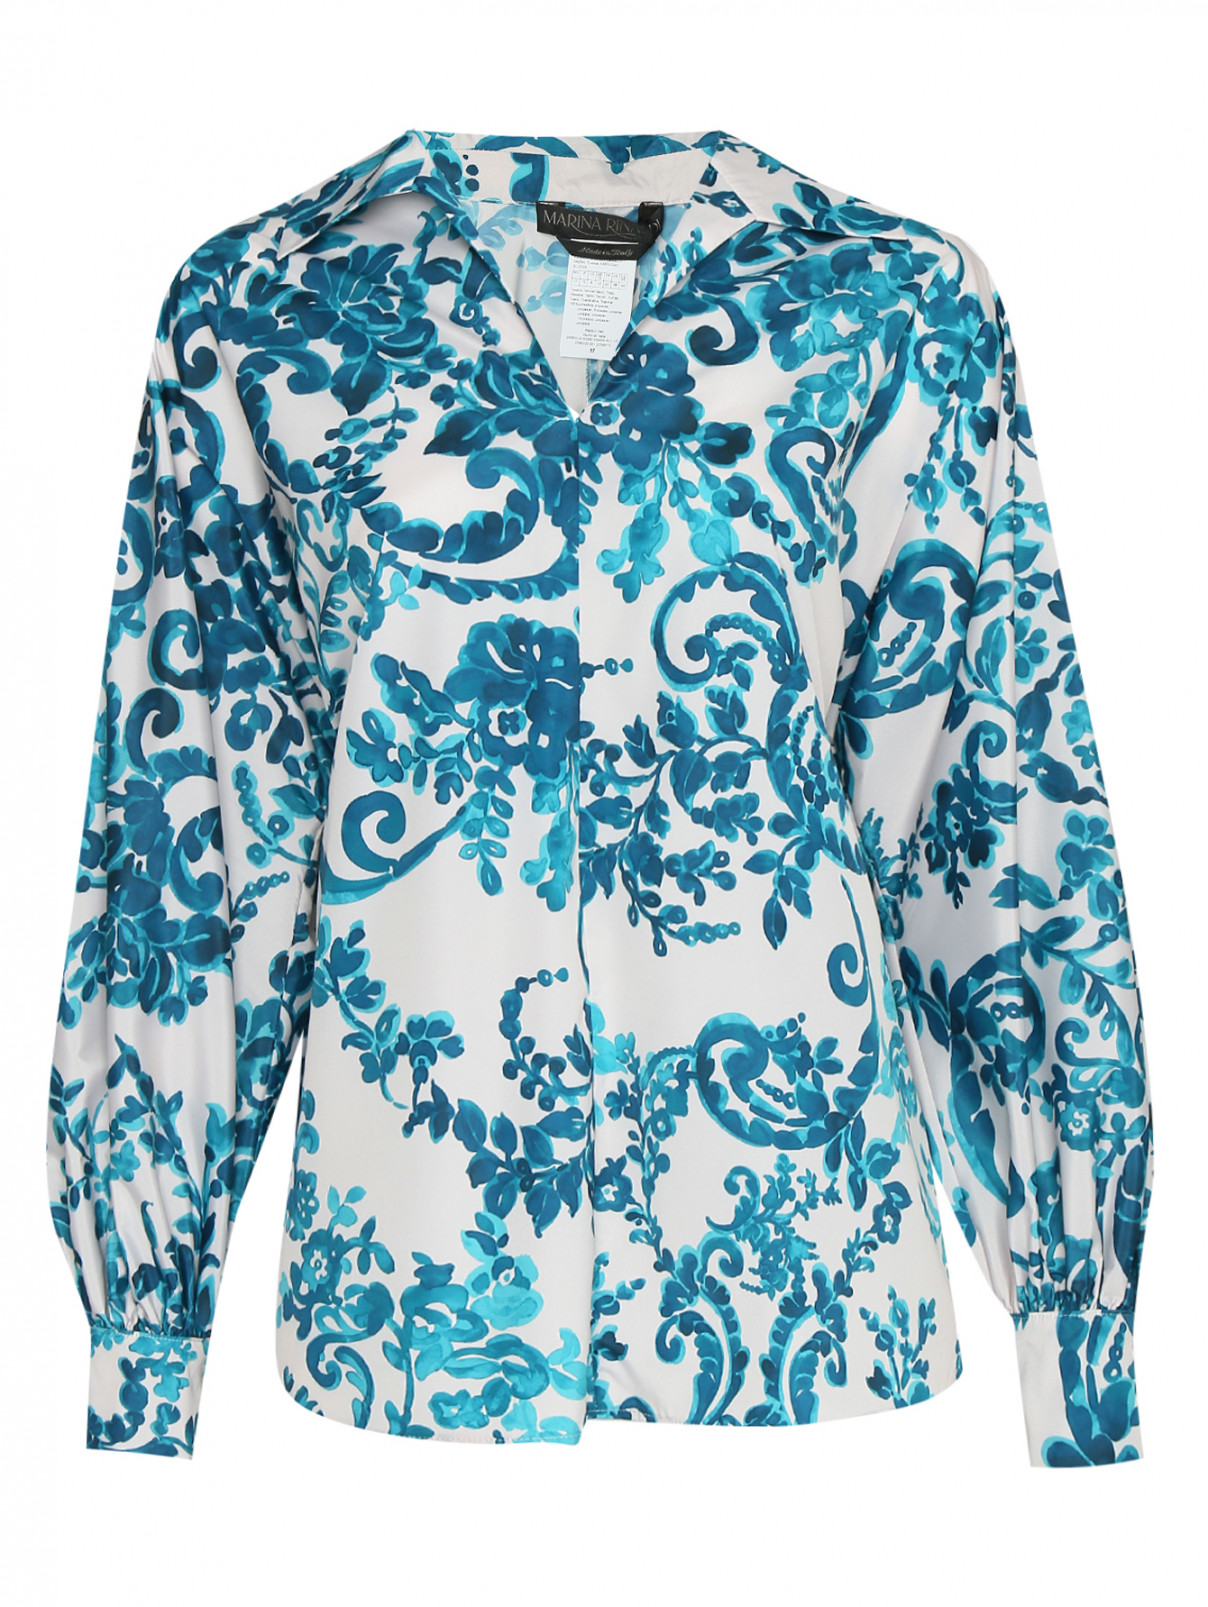 Блуза с узором Marina Rinaldi  –  Общий вид  – Цвет:  Узор